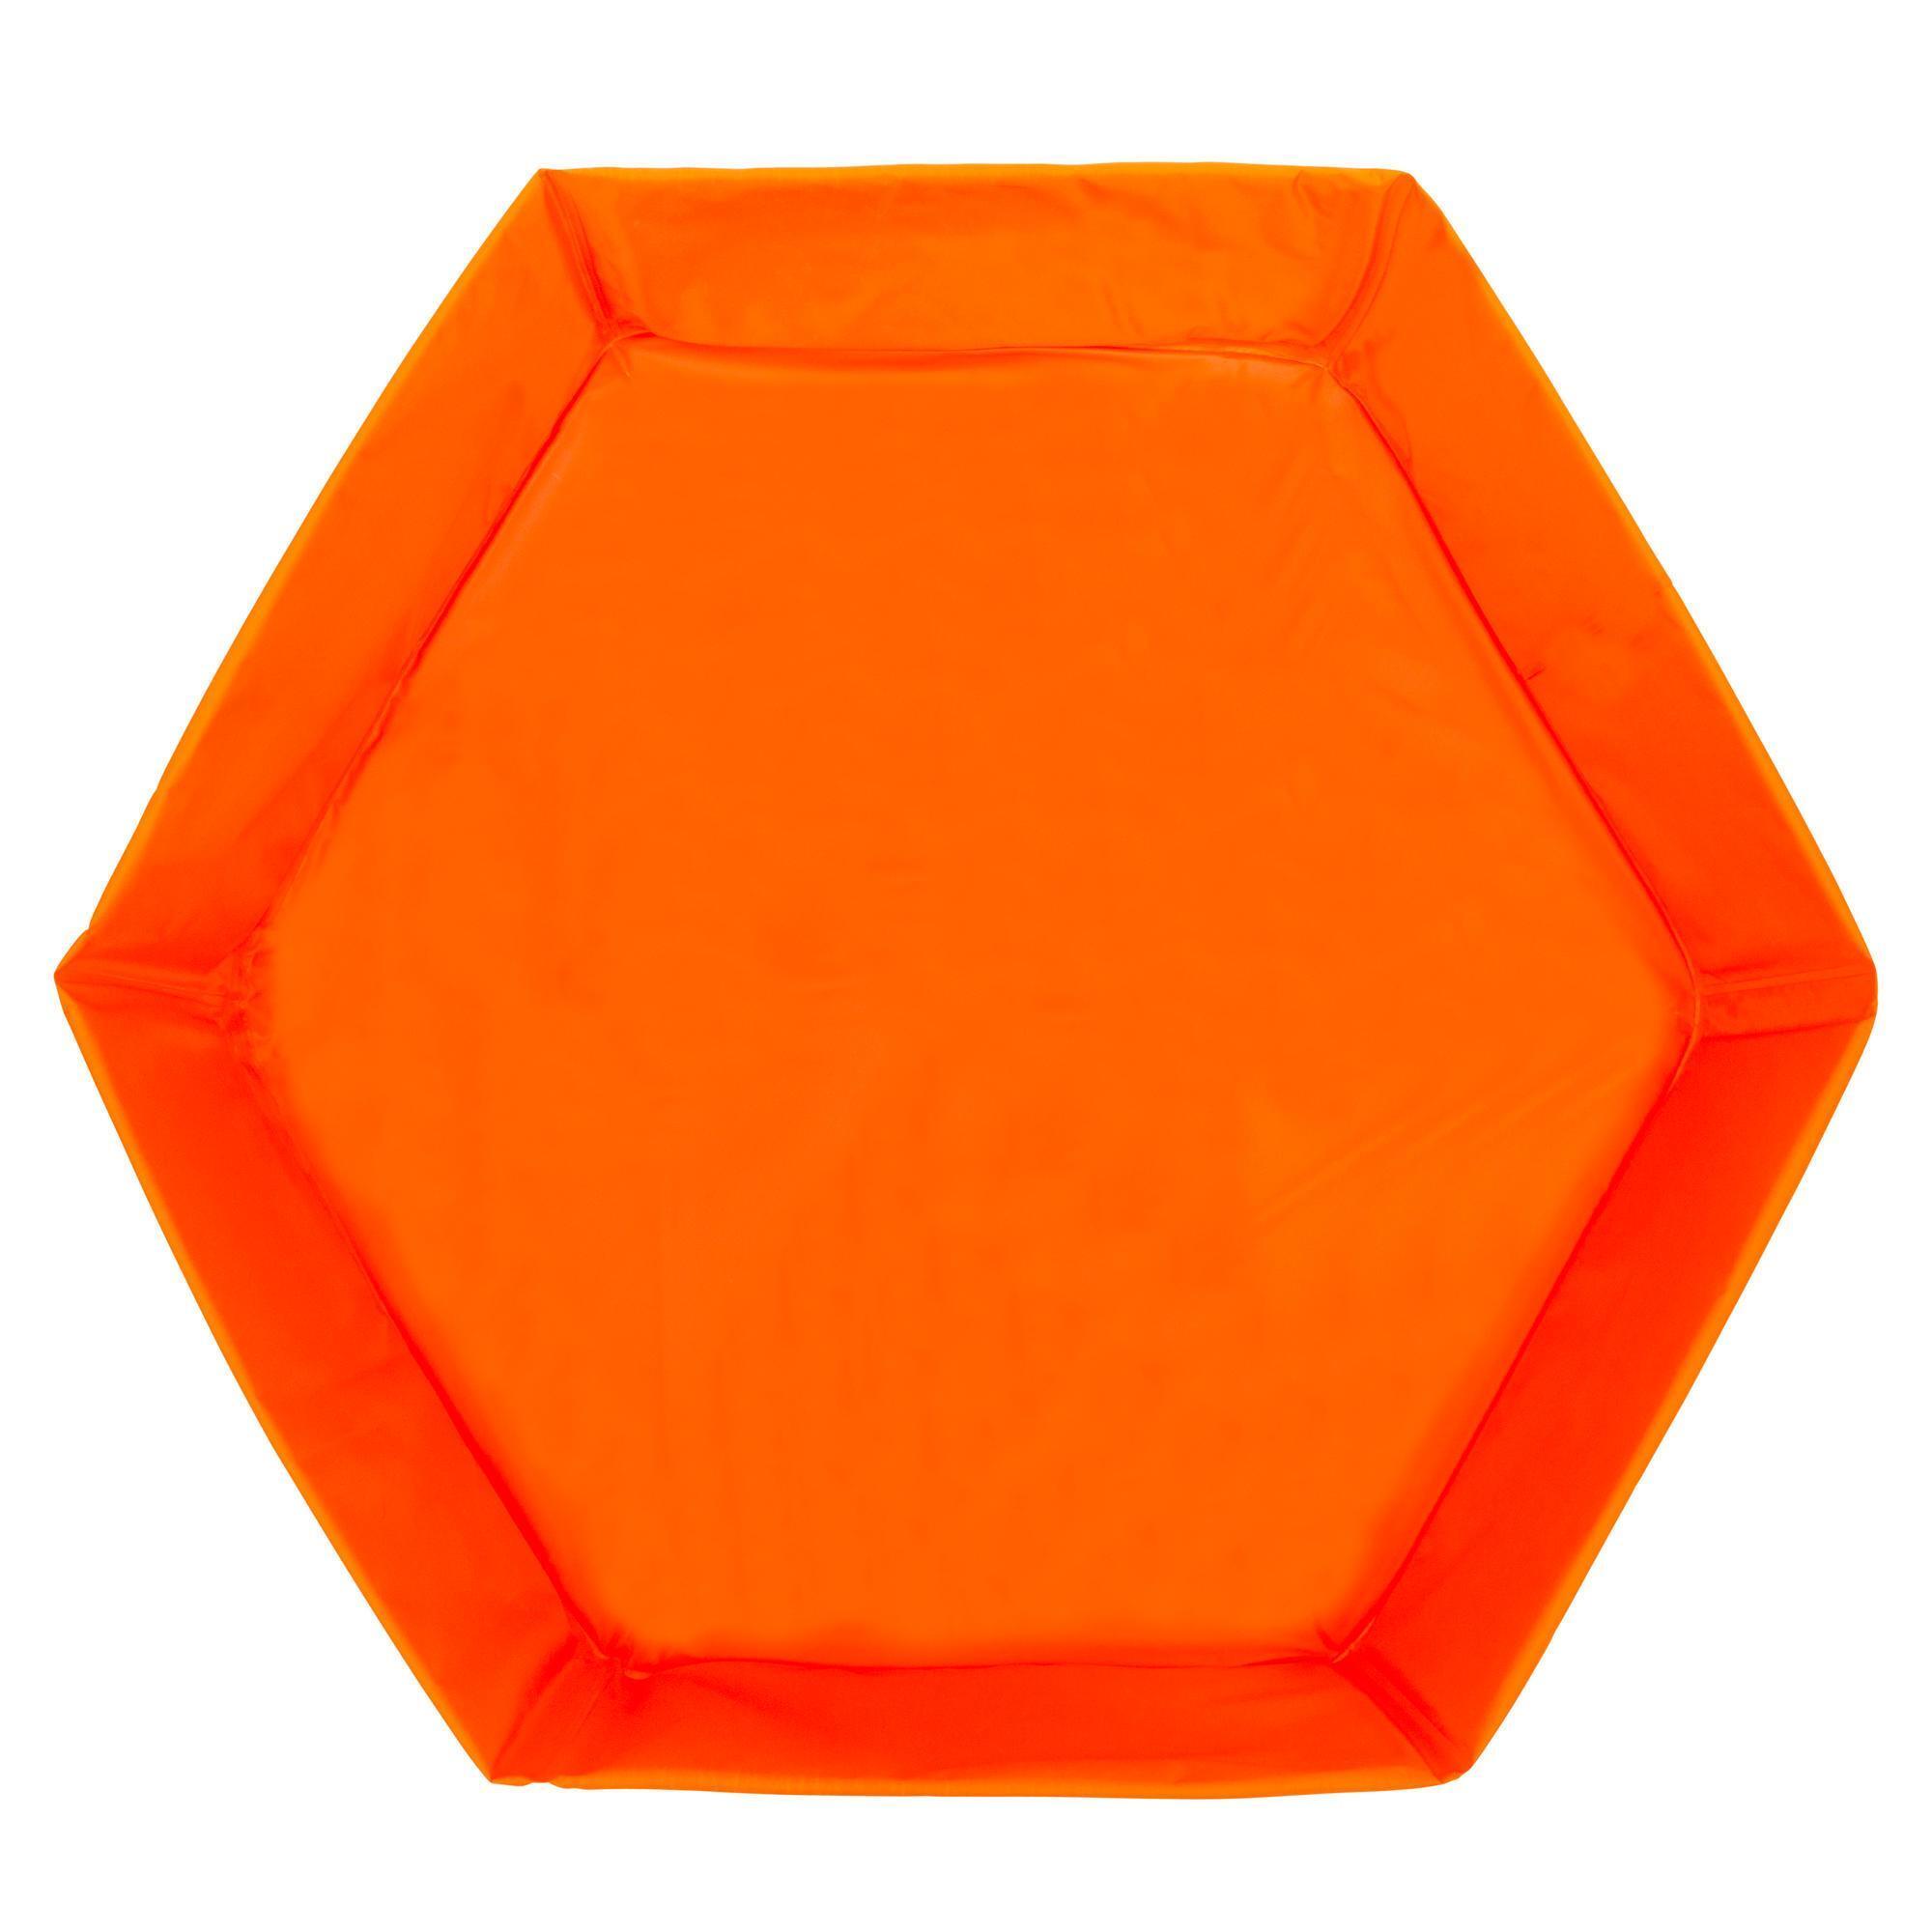 TIDIPOOL BASIC 65 m diameter foam paddling pool for infants - Orange 3/6